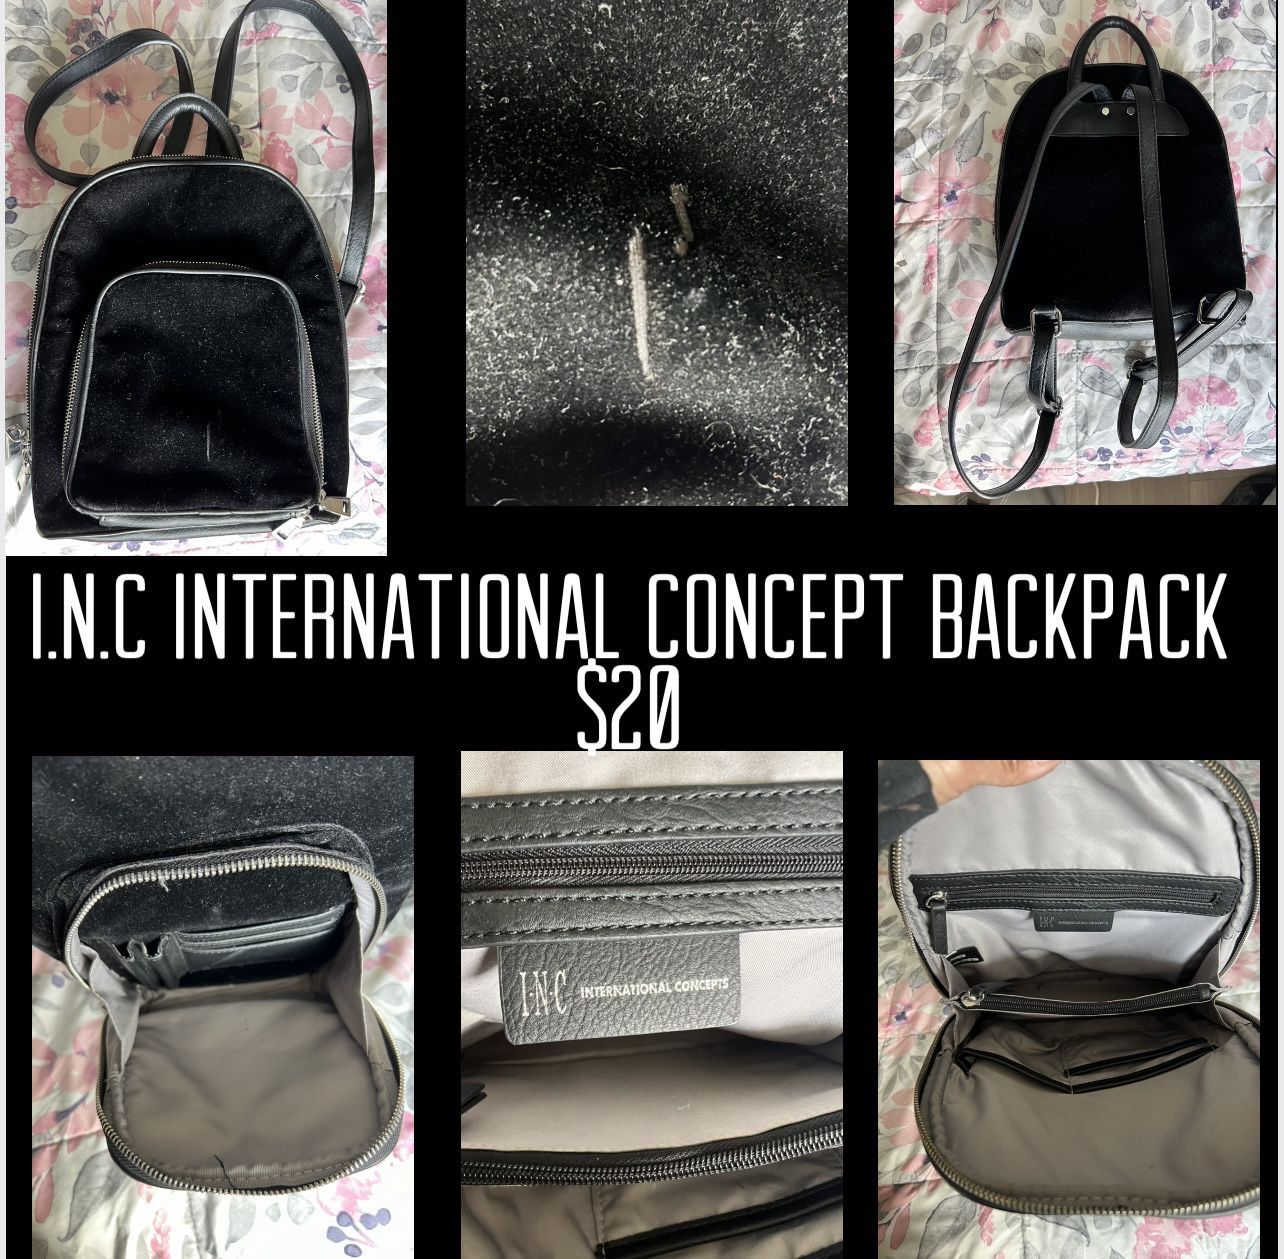 Suede Black Backpack $20